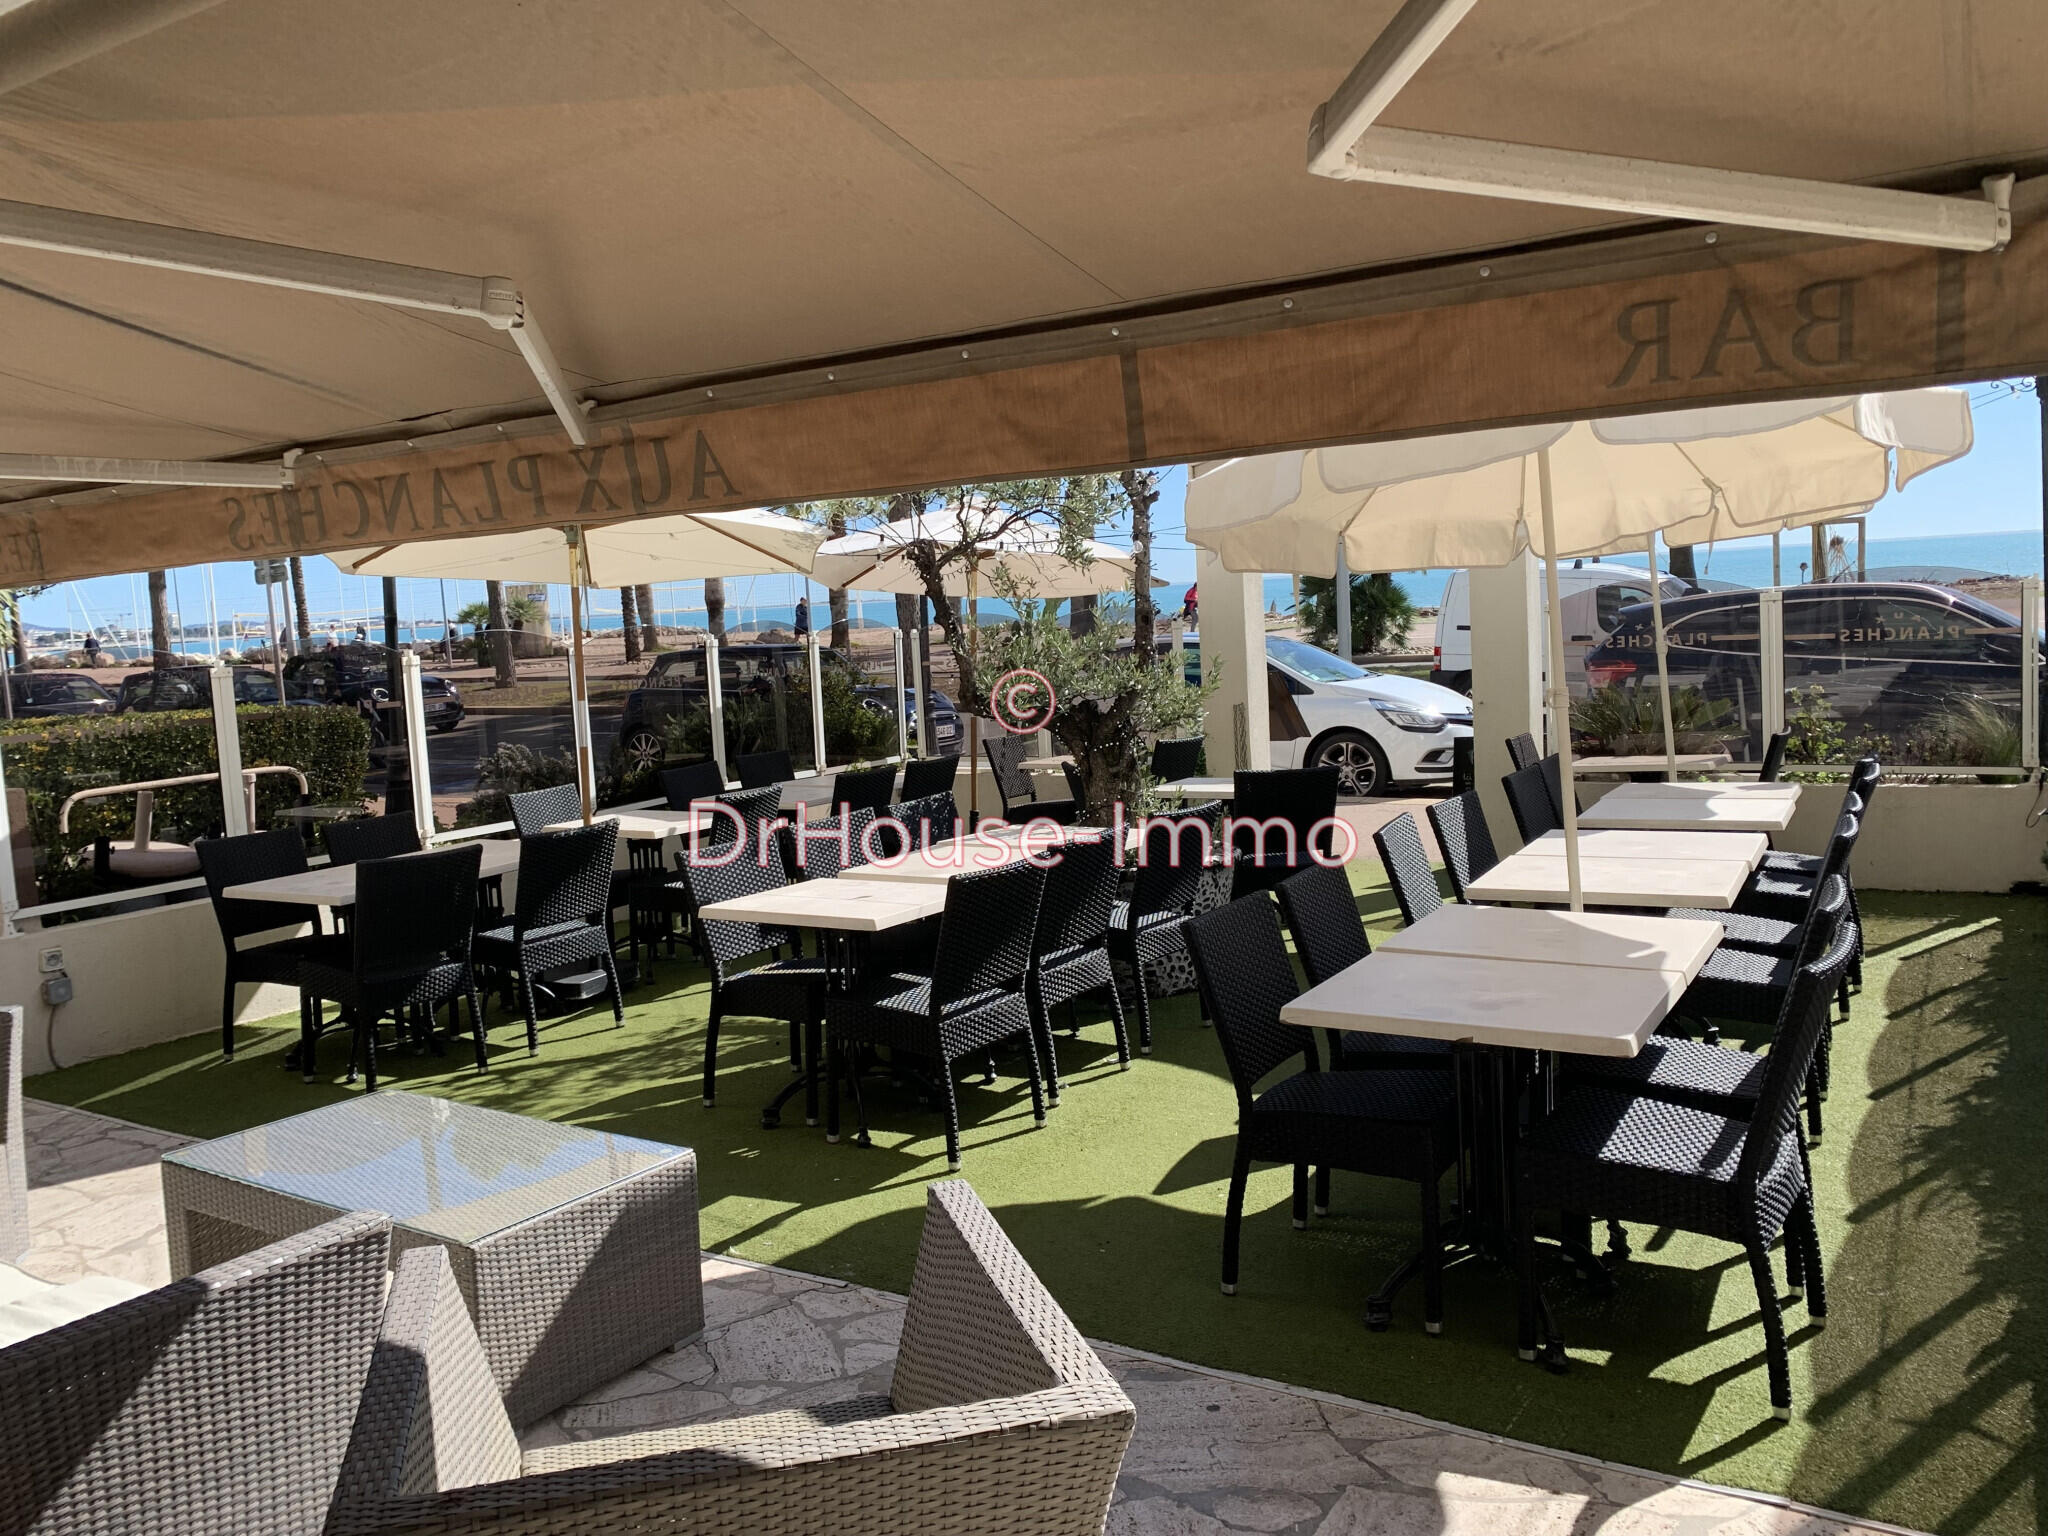 Vente restaurant terrasse bord de mer Cagnes/Mer